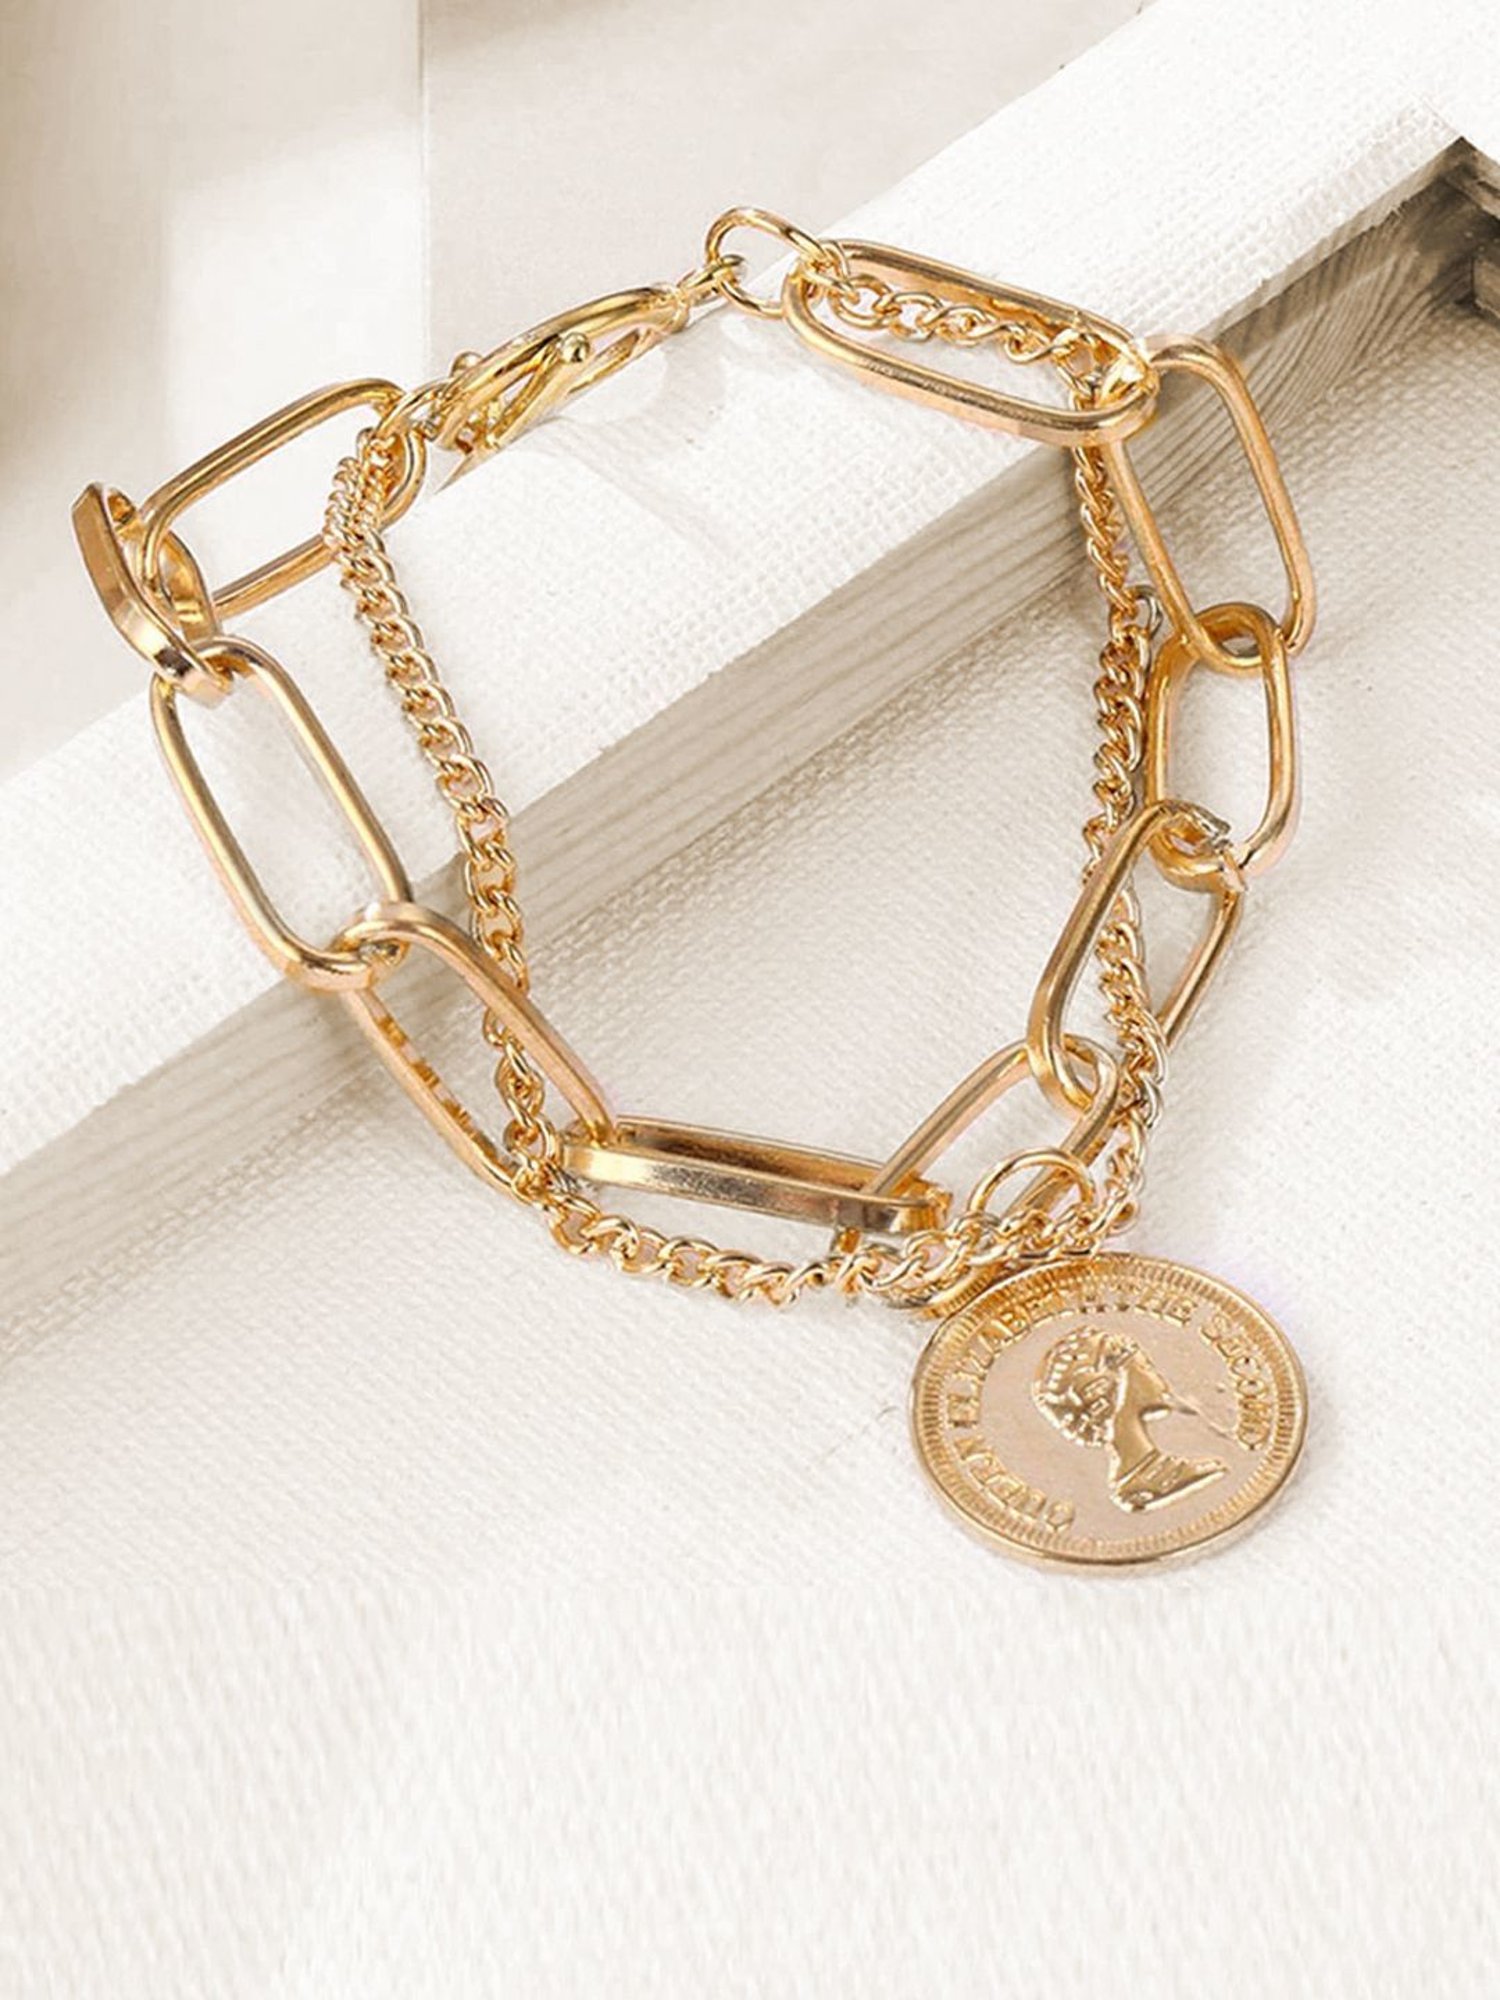 Gold Coin Bracelets Women | Ottoman Jewelry Turkish | Turkish Coins Jewelry  - Chain - Aliexpress